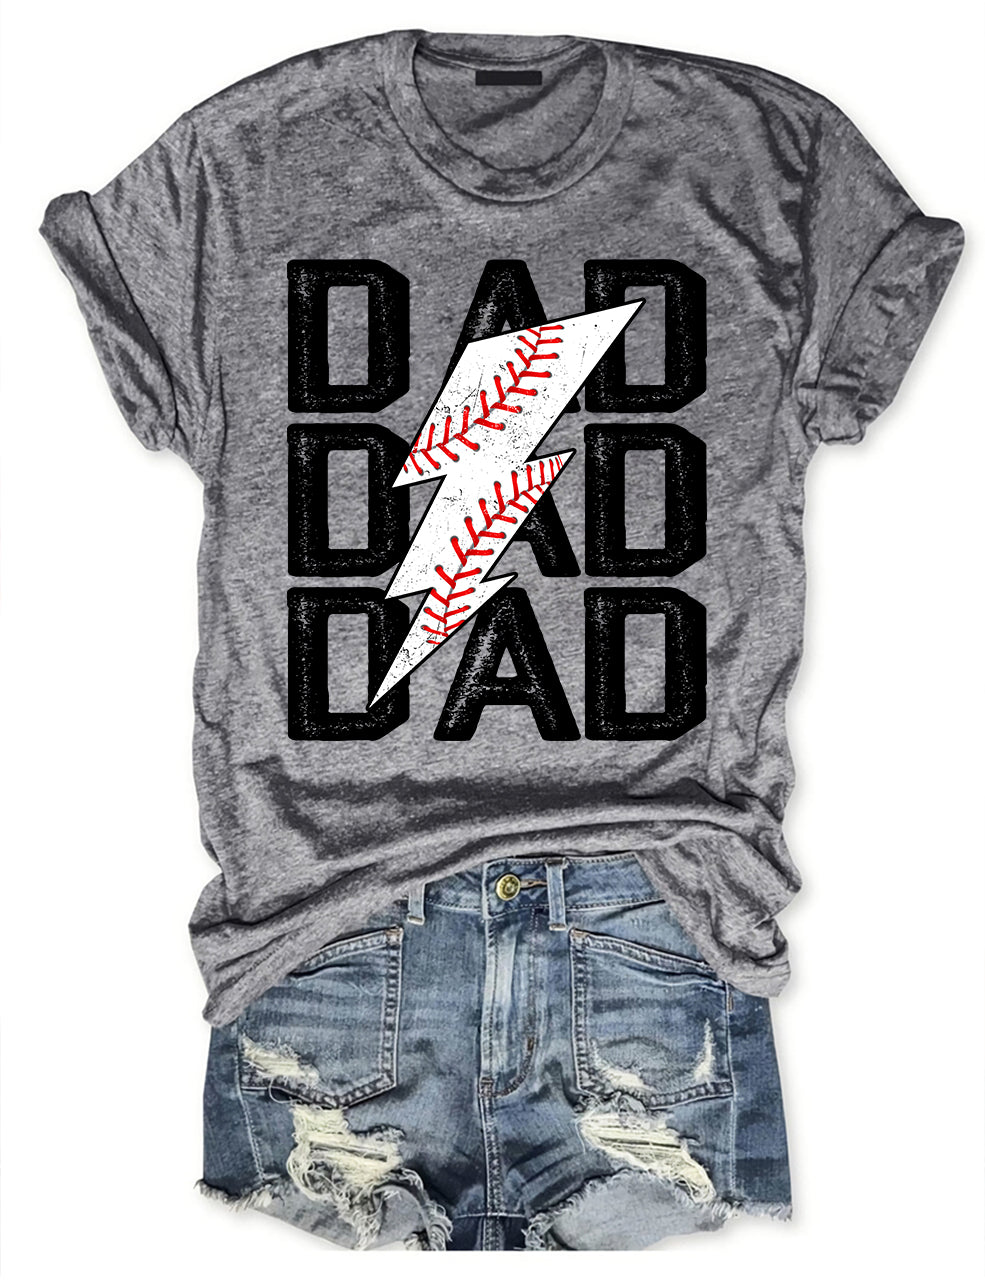 Retro Baseball dad T-shirt